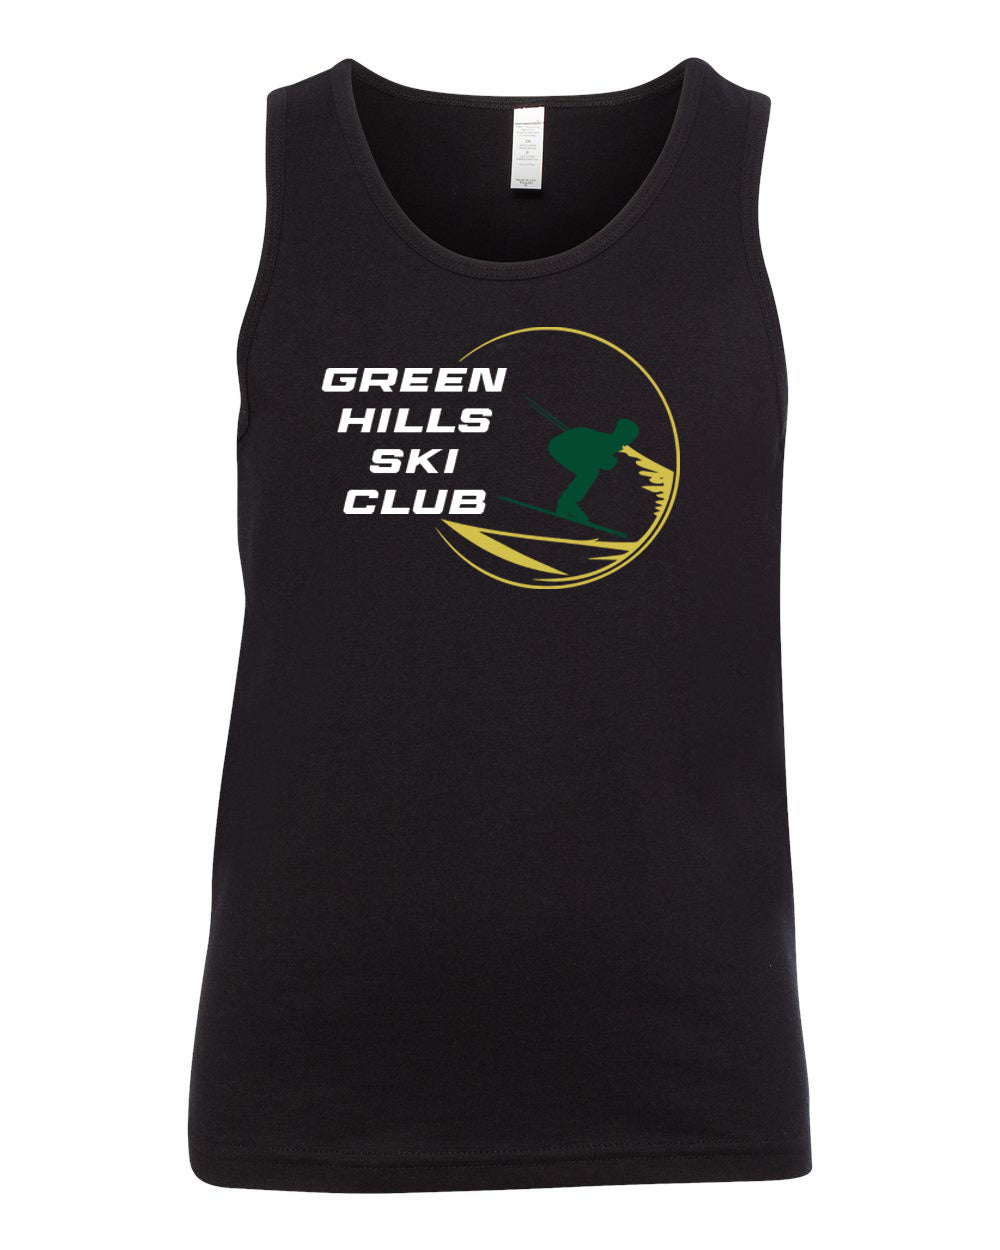 Green Hills Ski Club design 1 Muscle Tank Top